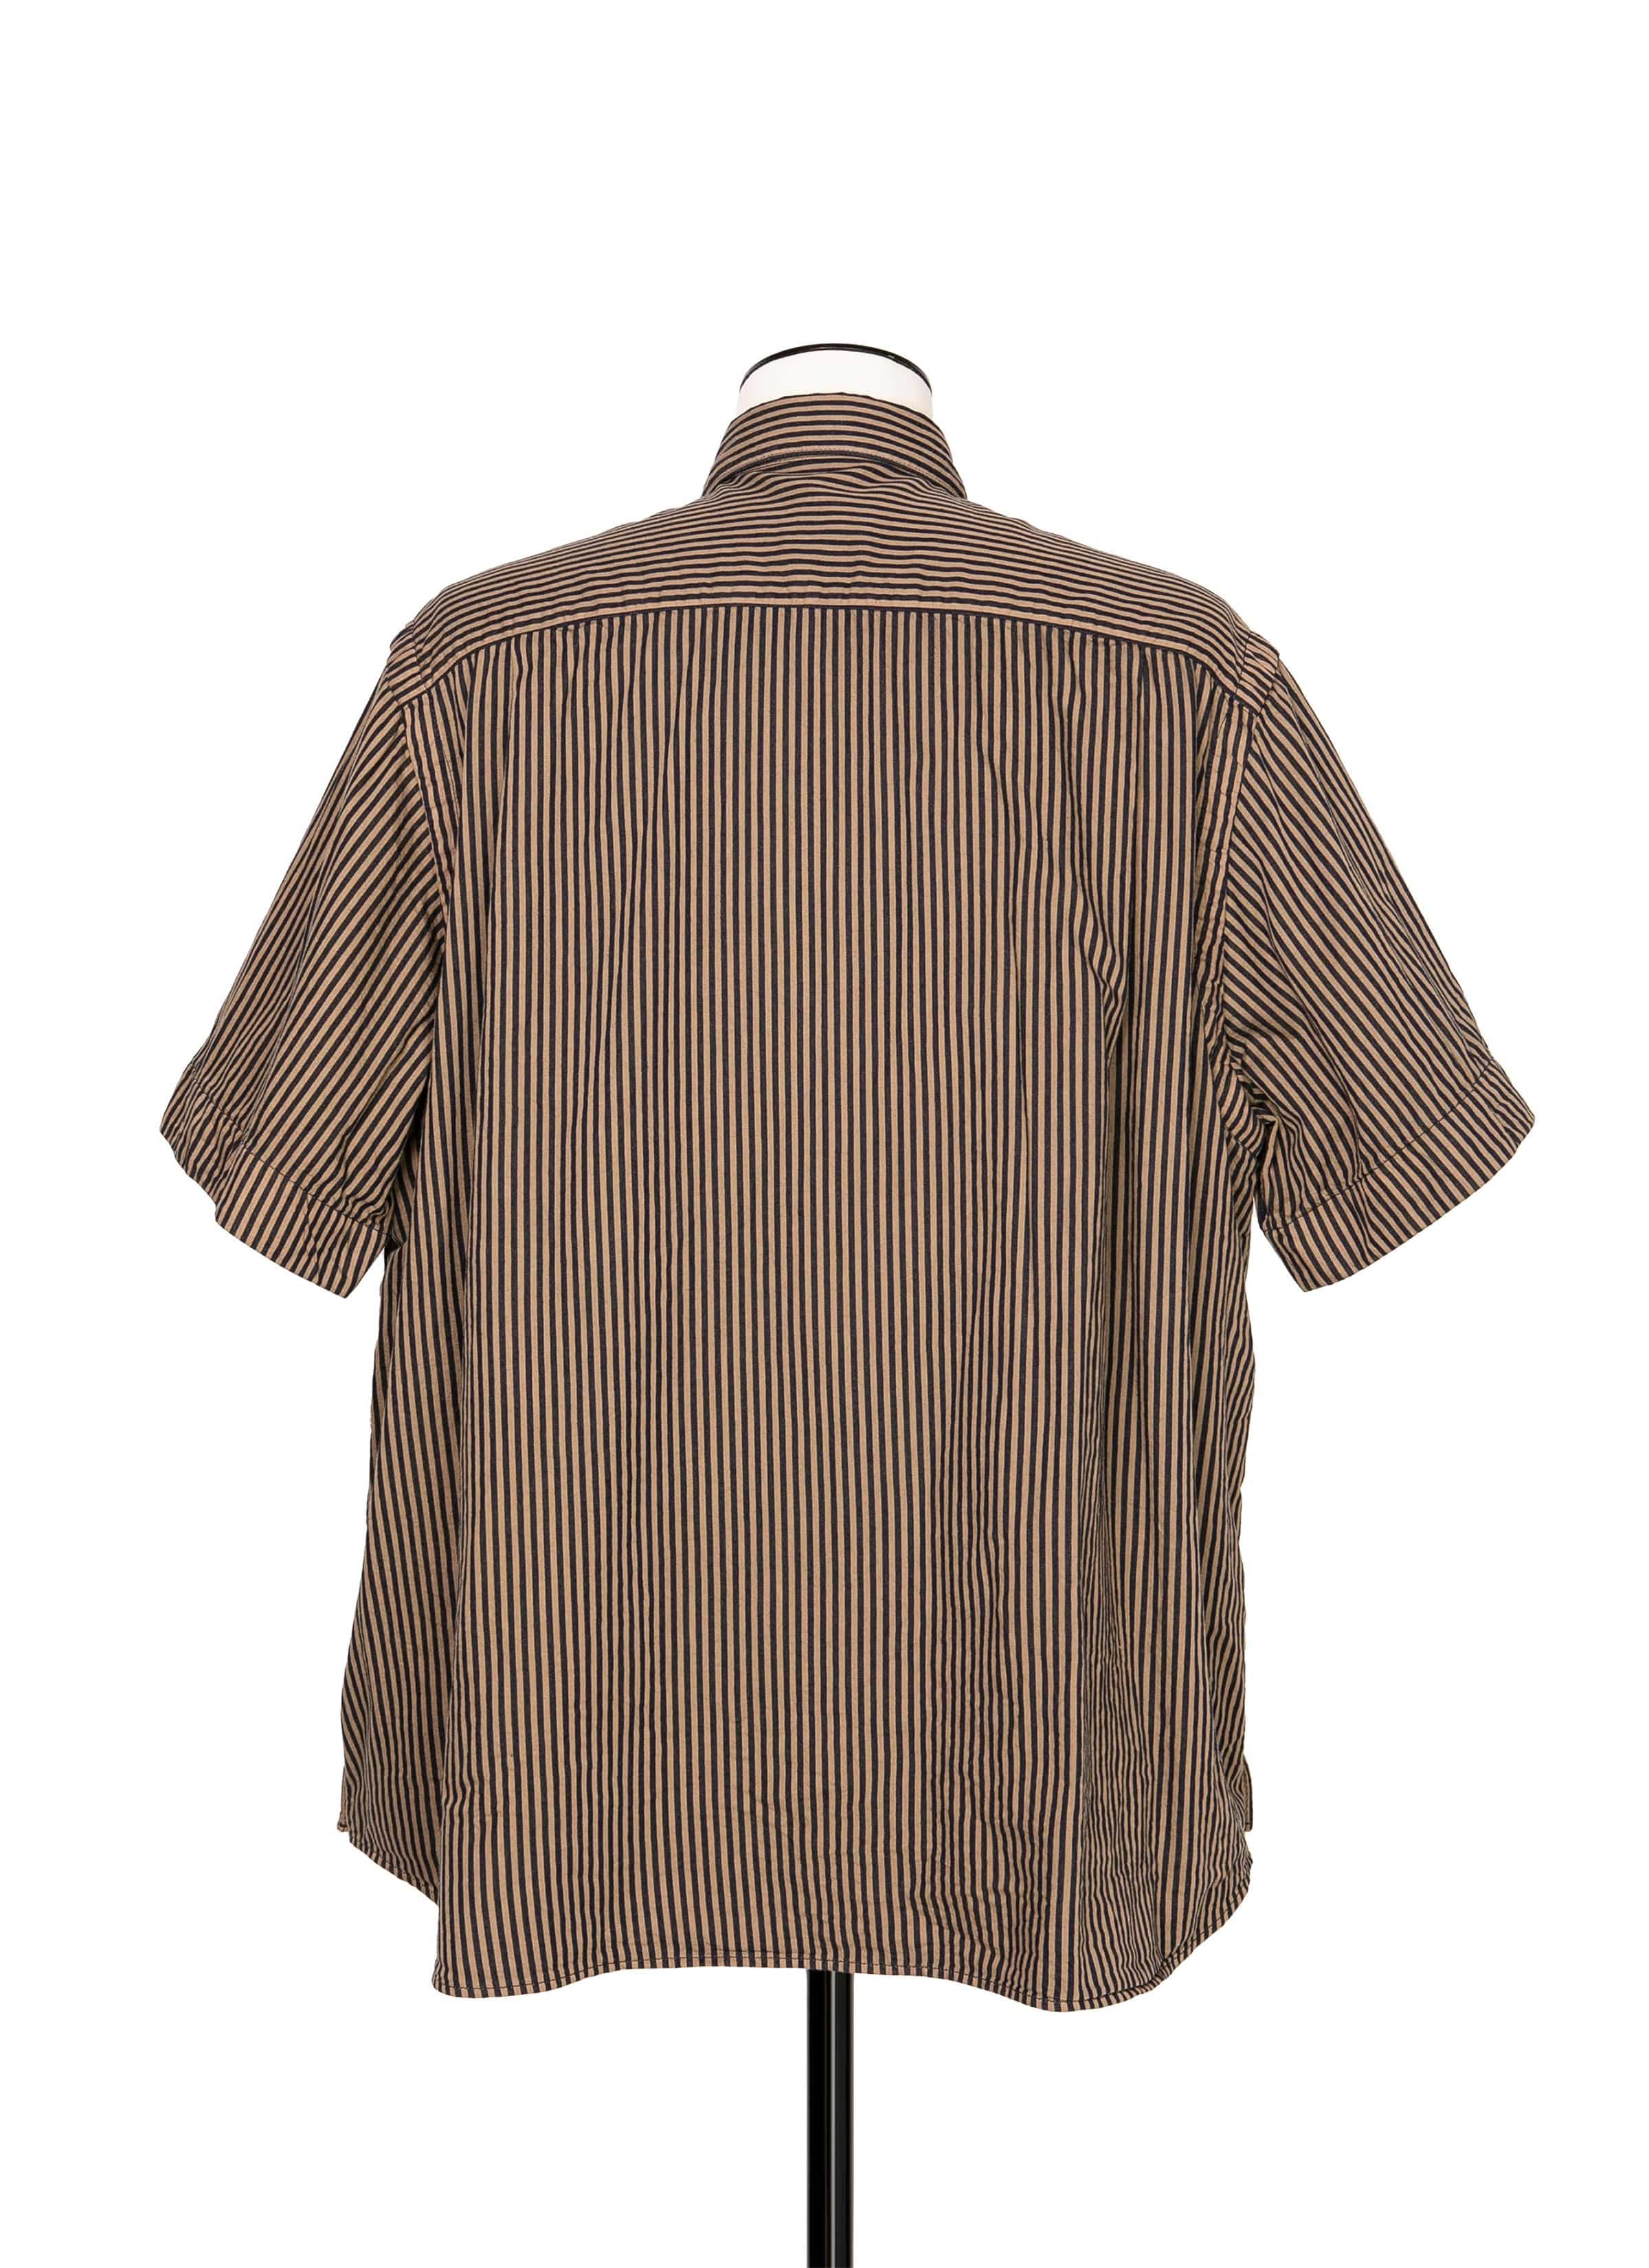 Hickory Stripe Shirt 詳細画像 BEIGE 4